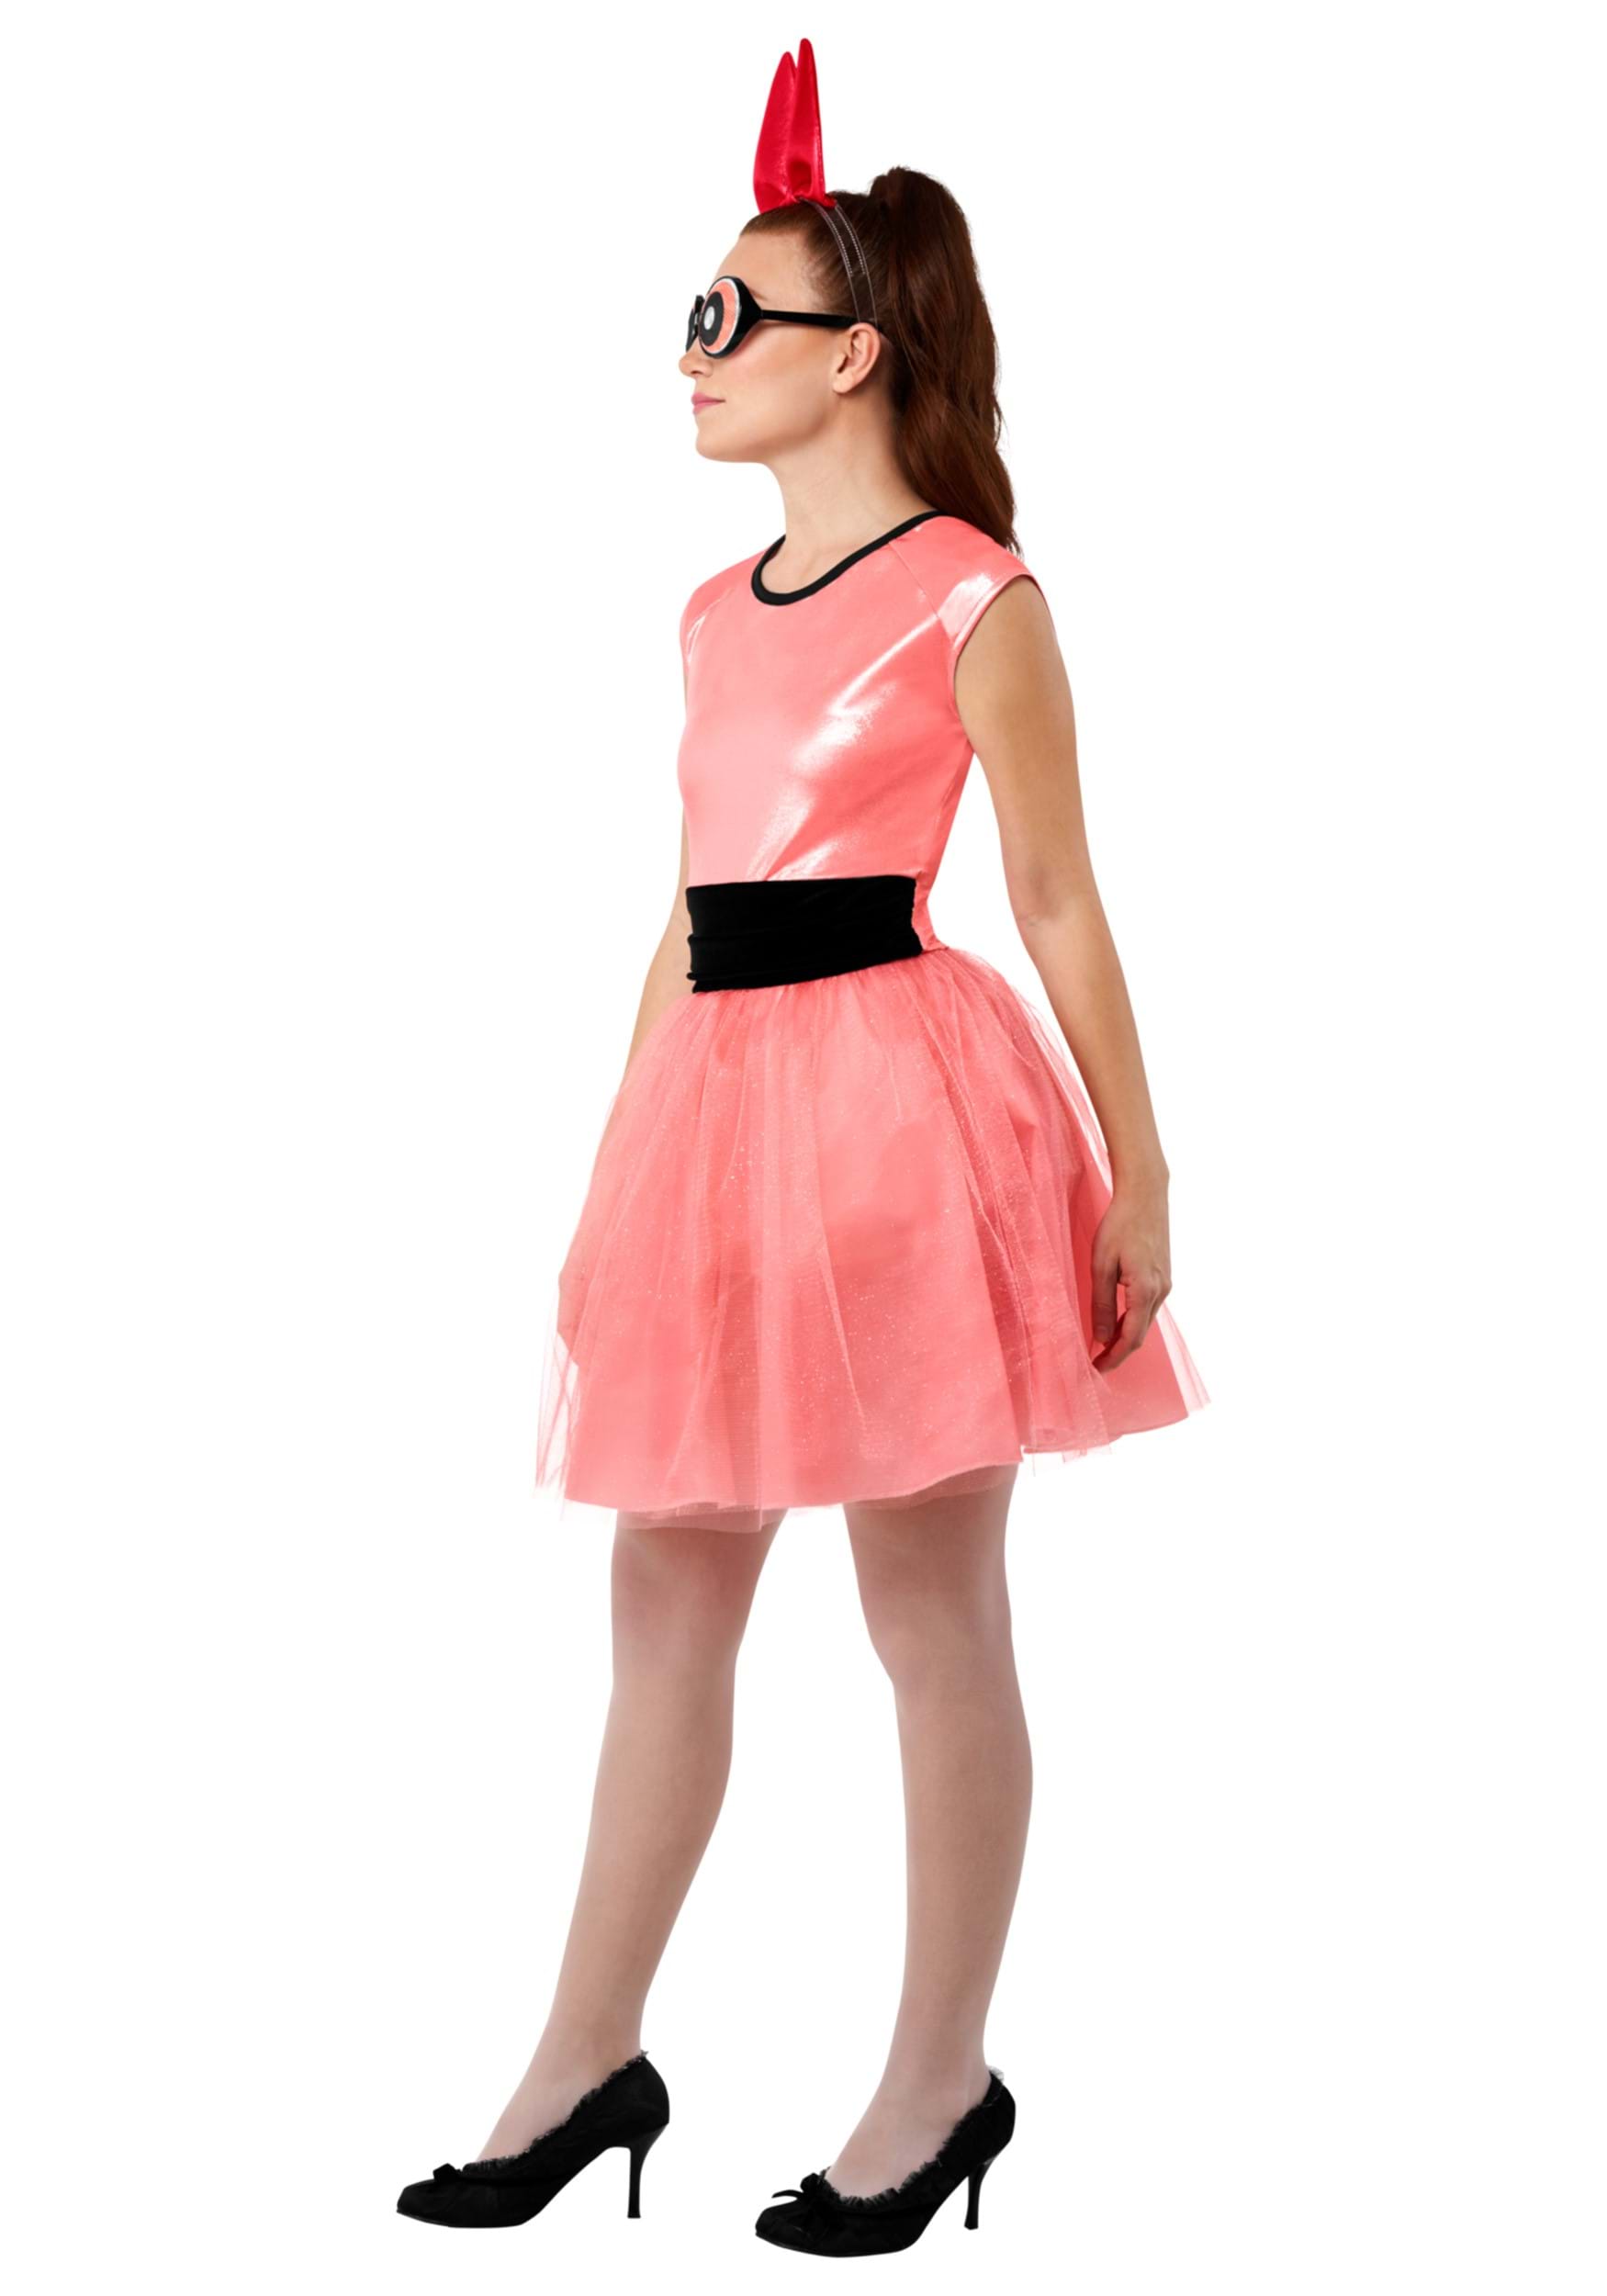 Powerpuff Girls Blossom Women's Fancy Dress Costume